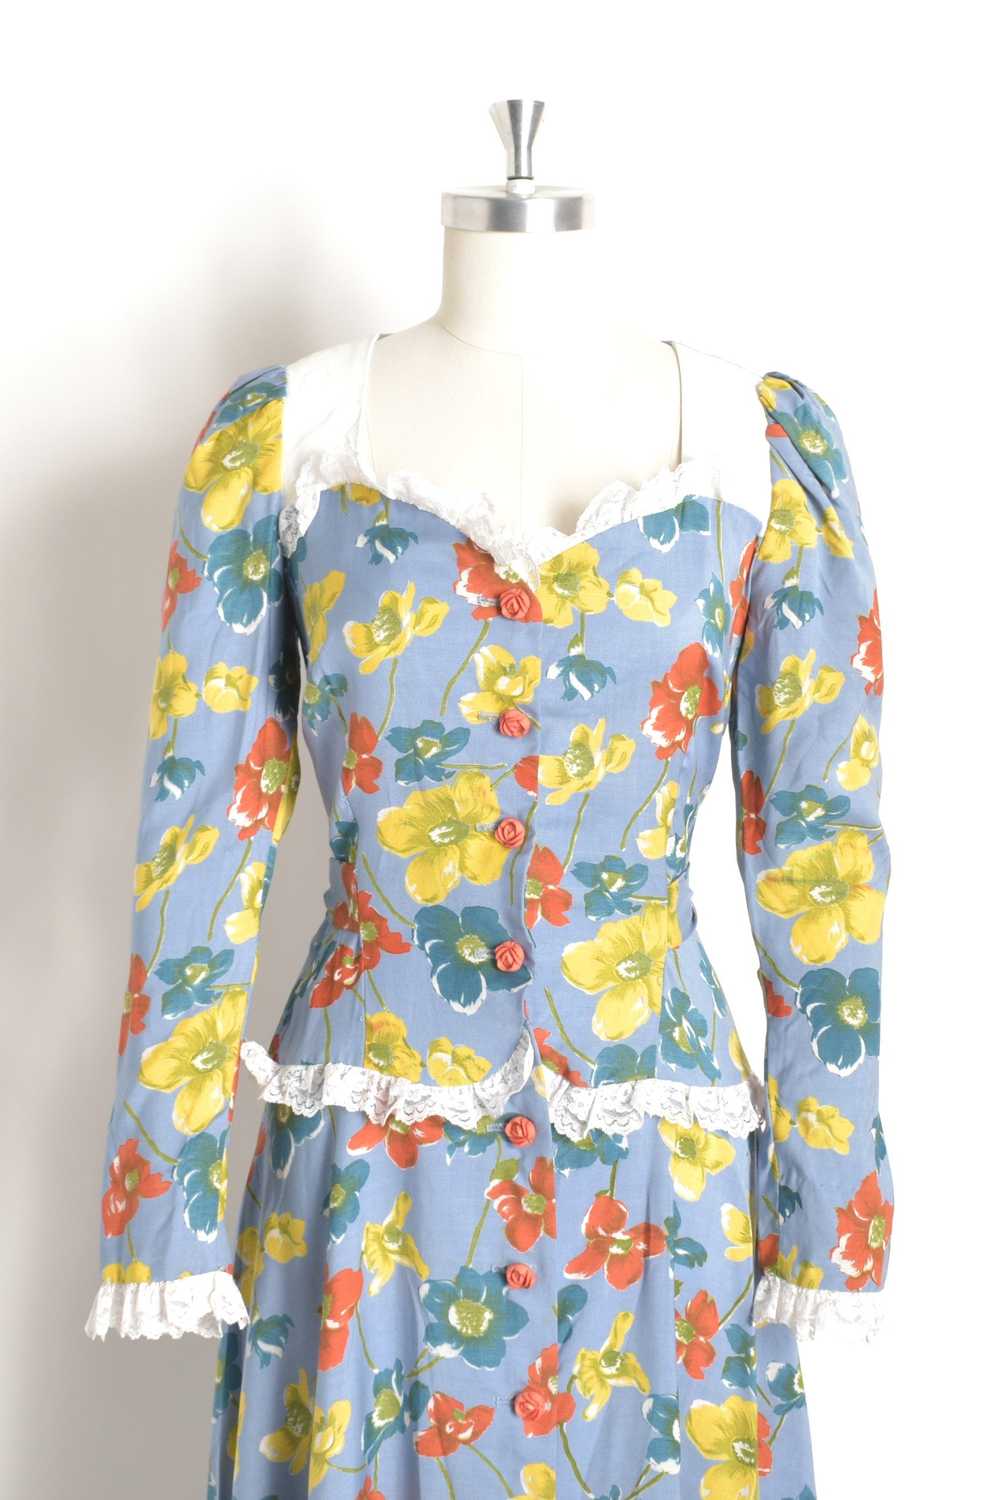 1970s Floral Button Up Dress-medium - image 2